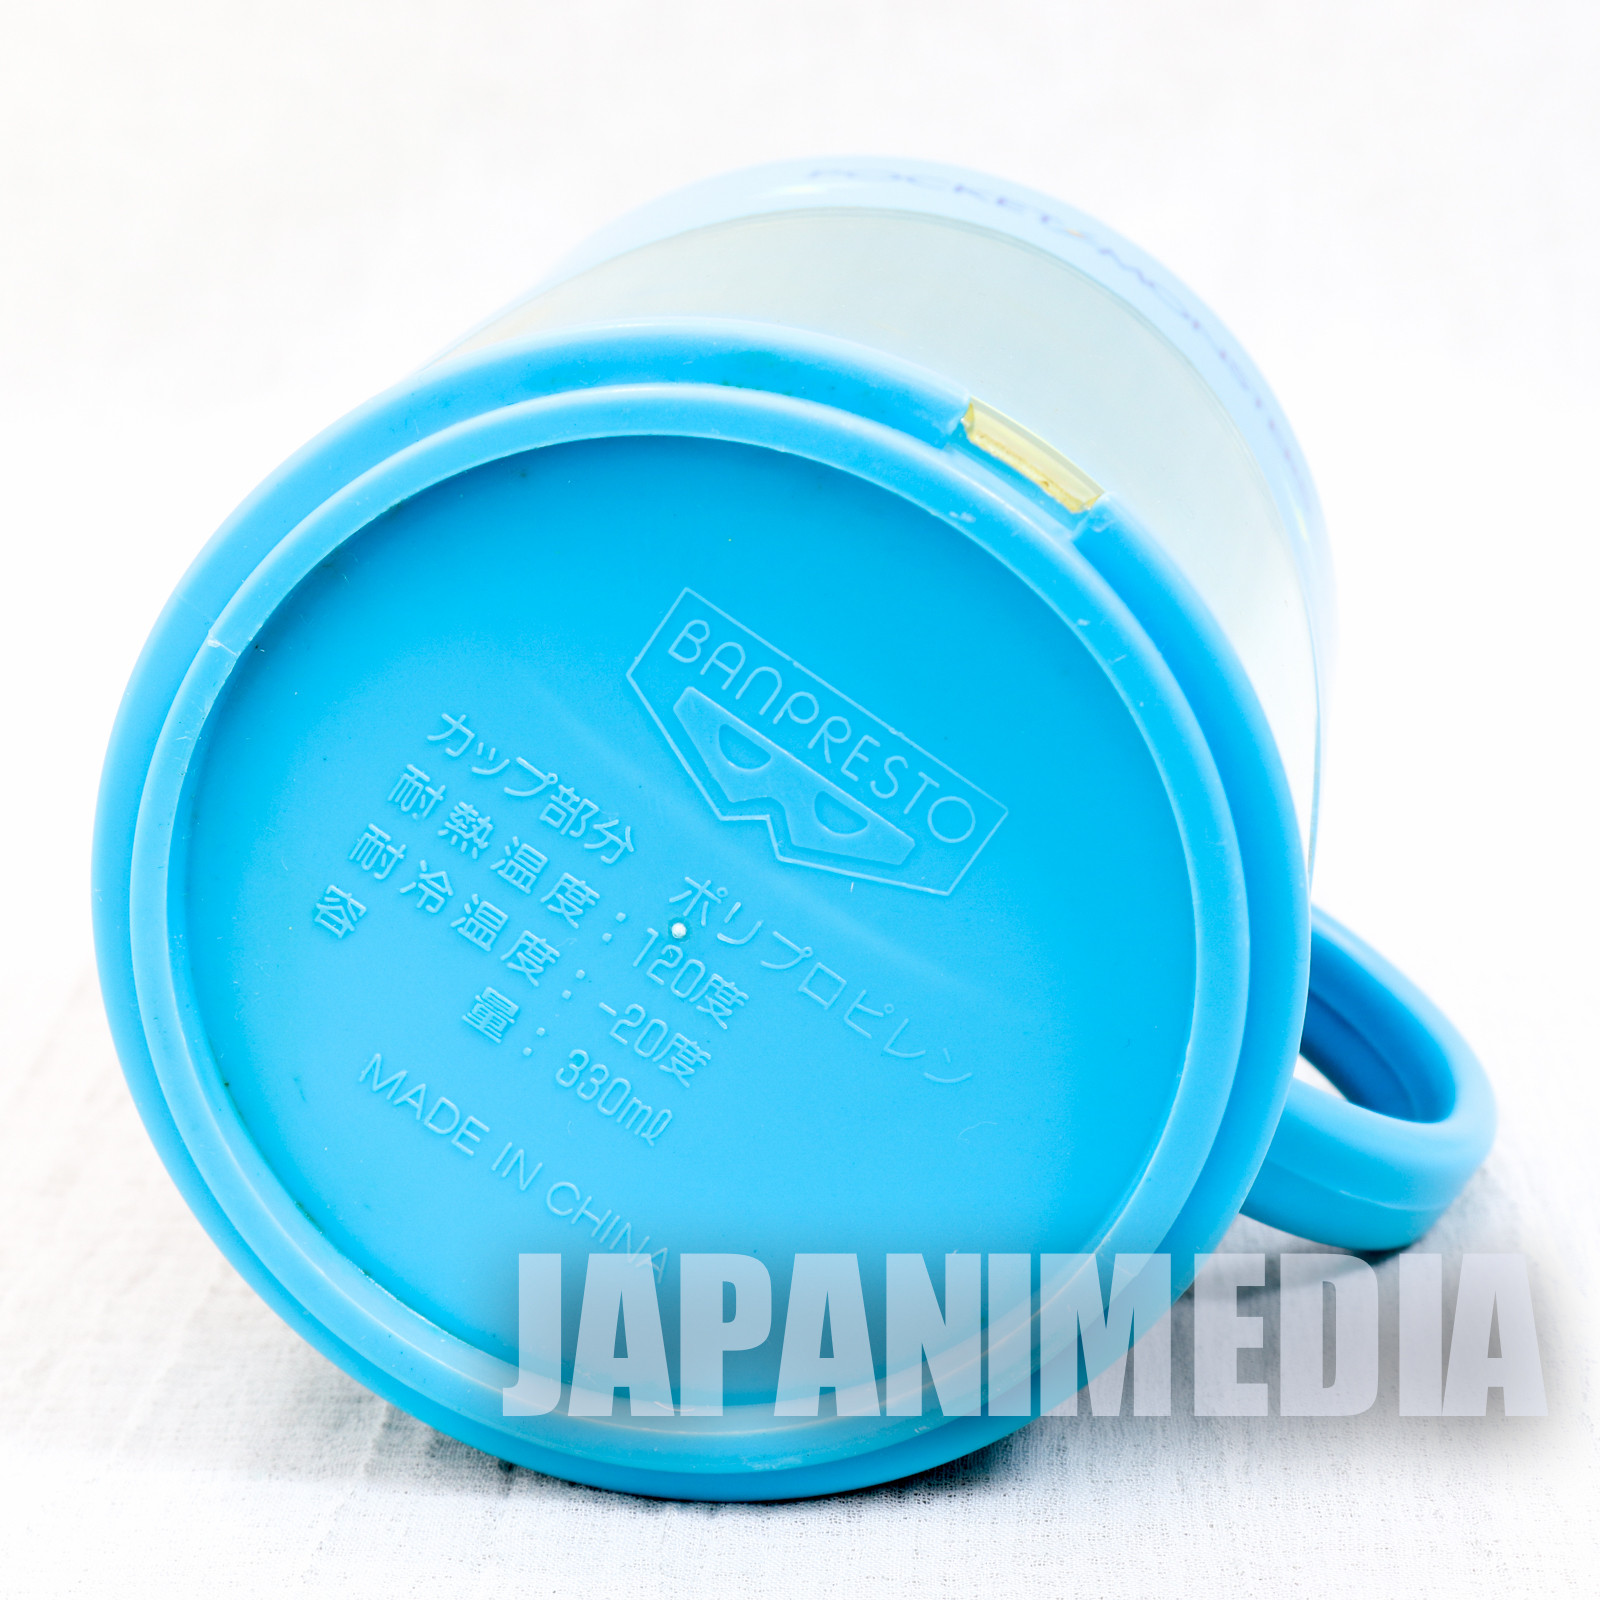 Retro RARE! Pokemon Pikachu Figure in Plastic Mug Banpresto JAPAN ANIME